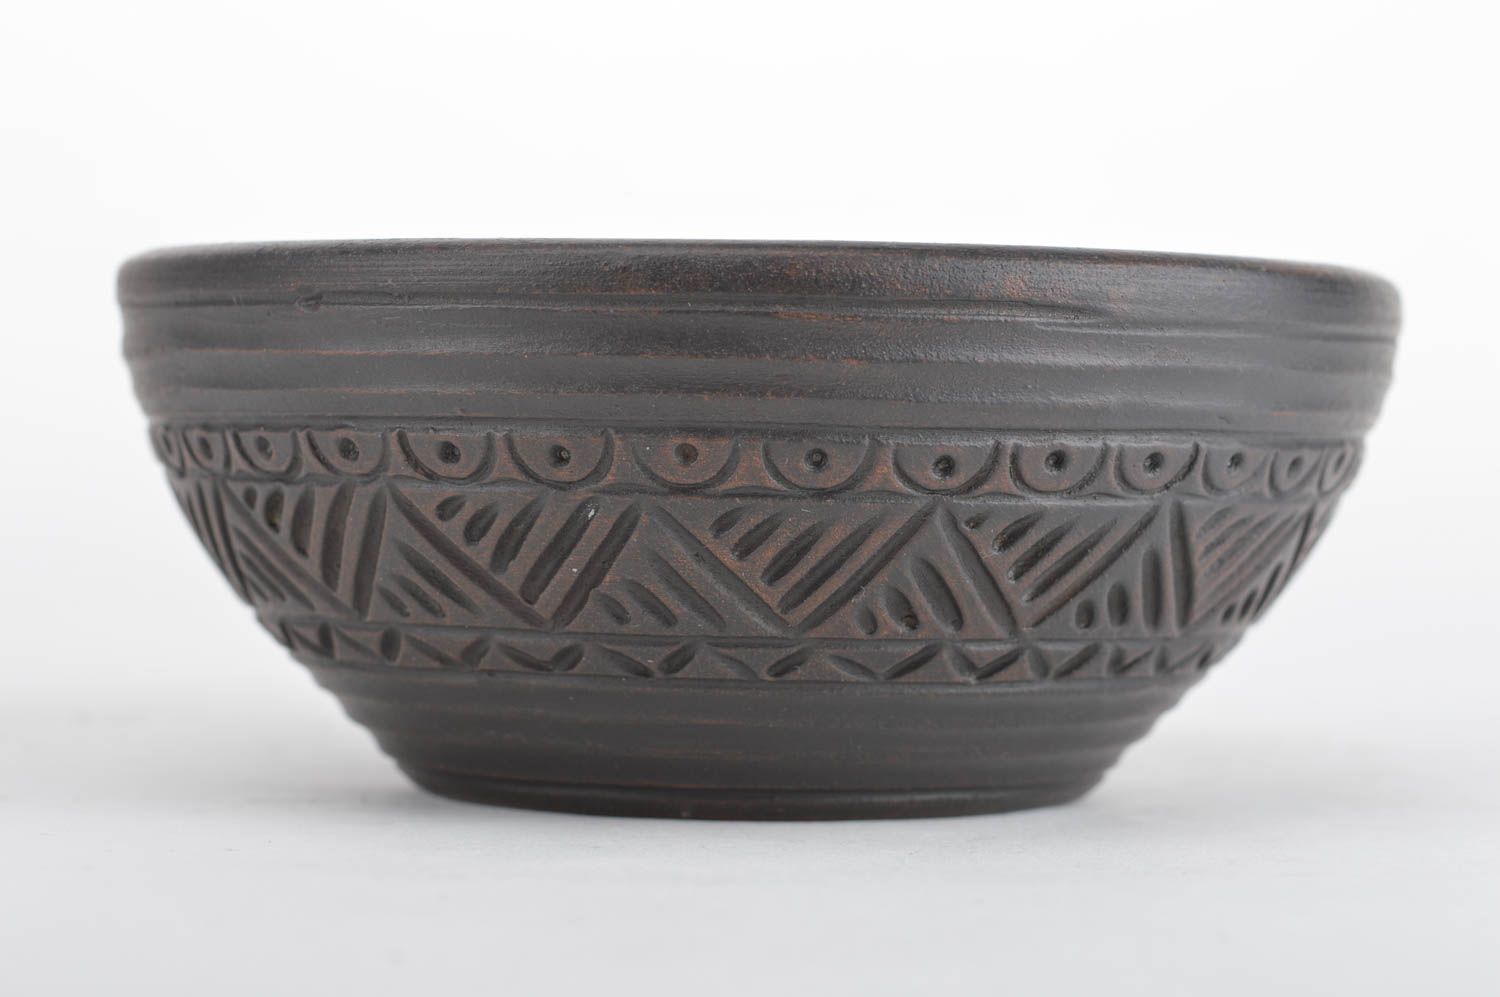 5,5 3 oz, not deep pinch ceramic bowl in greek style 0,68 lb photo 5